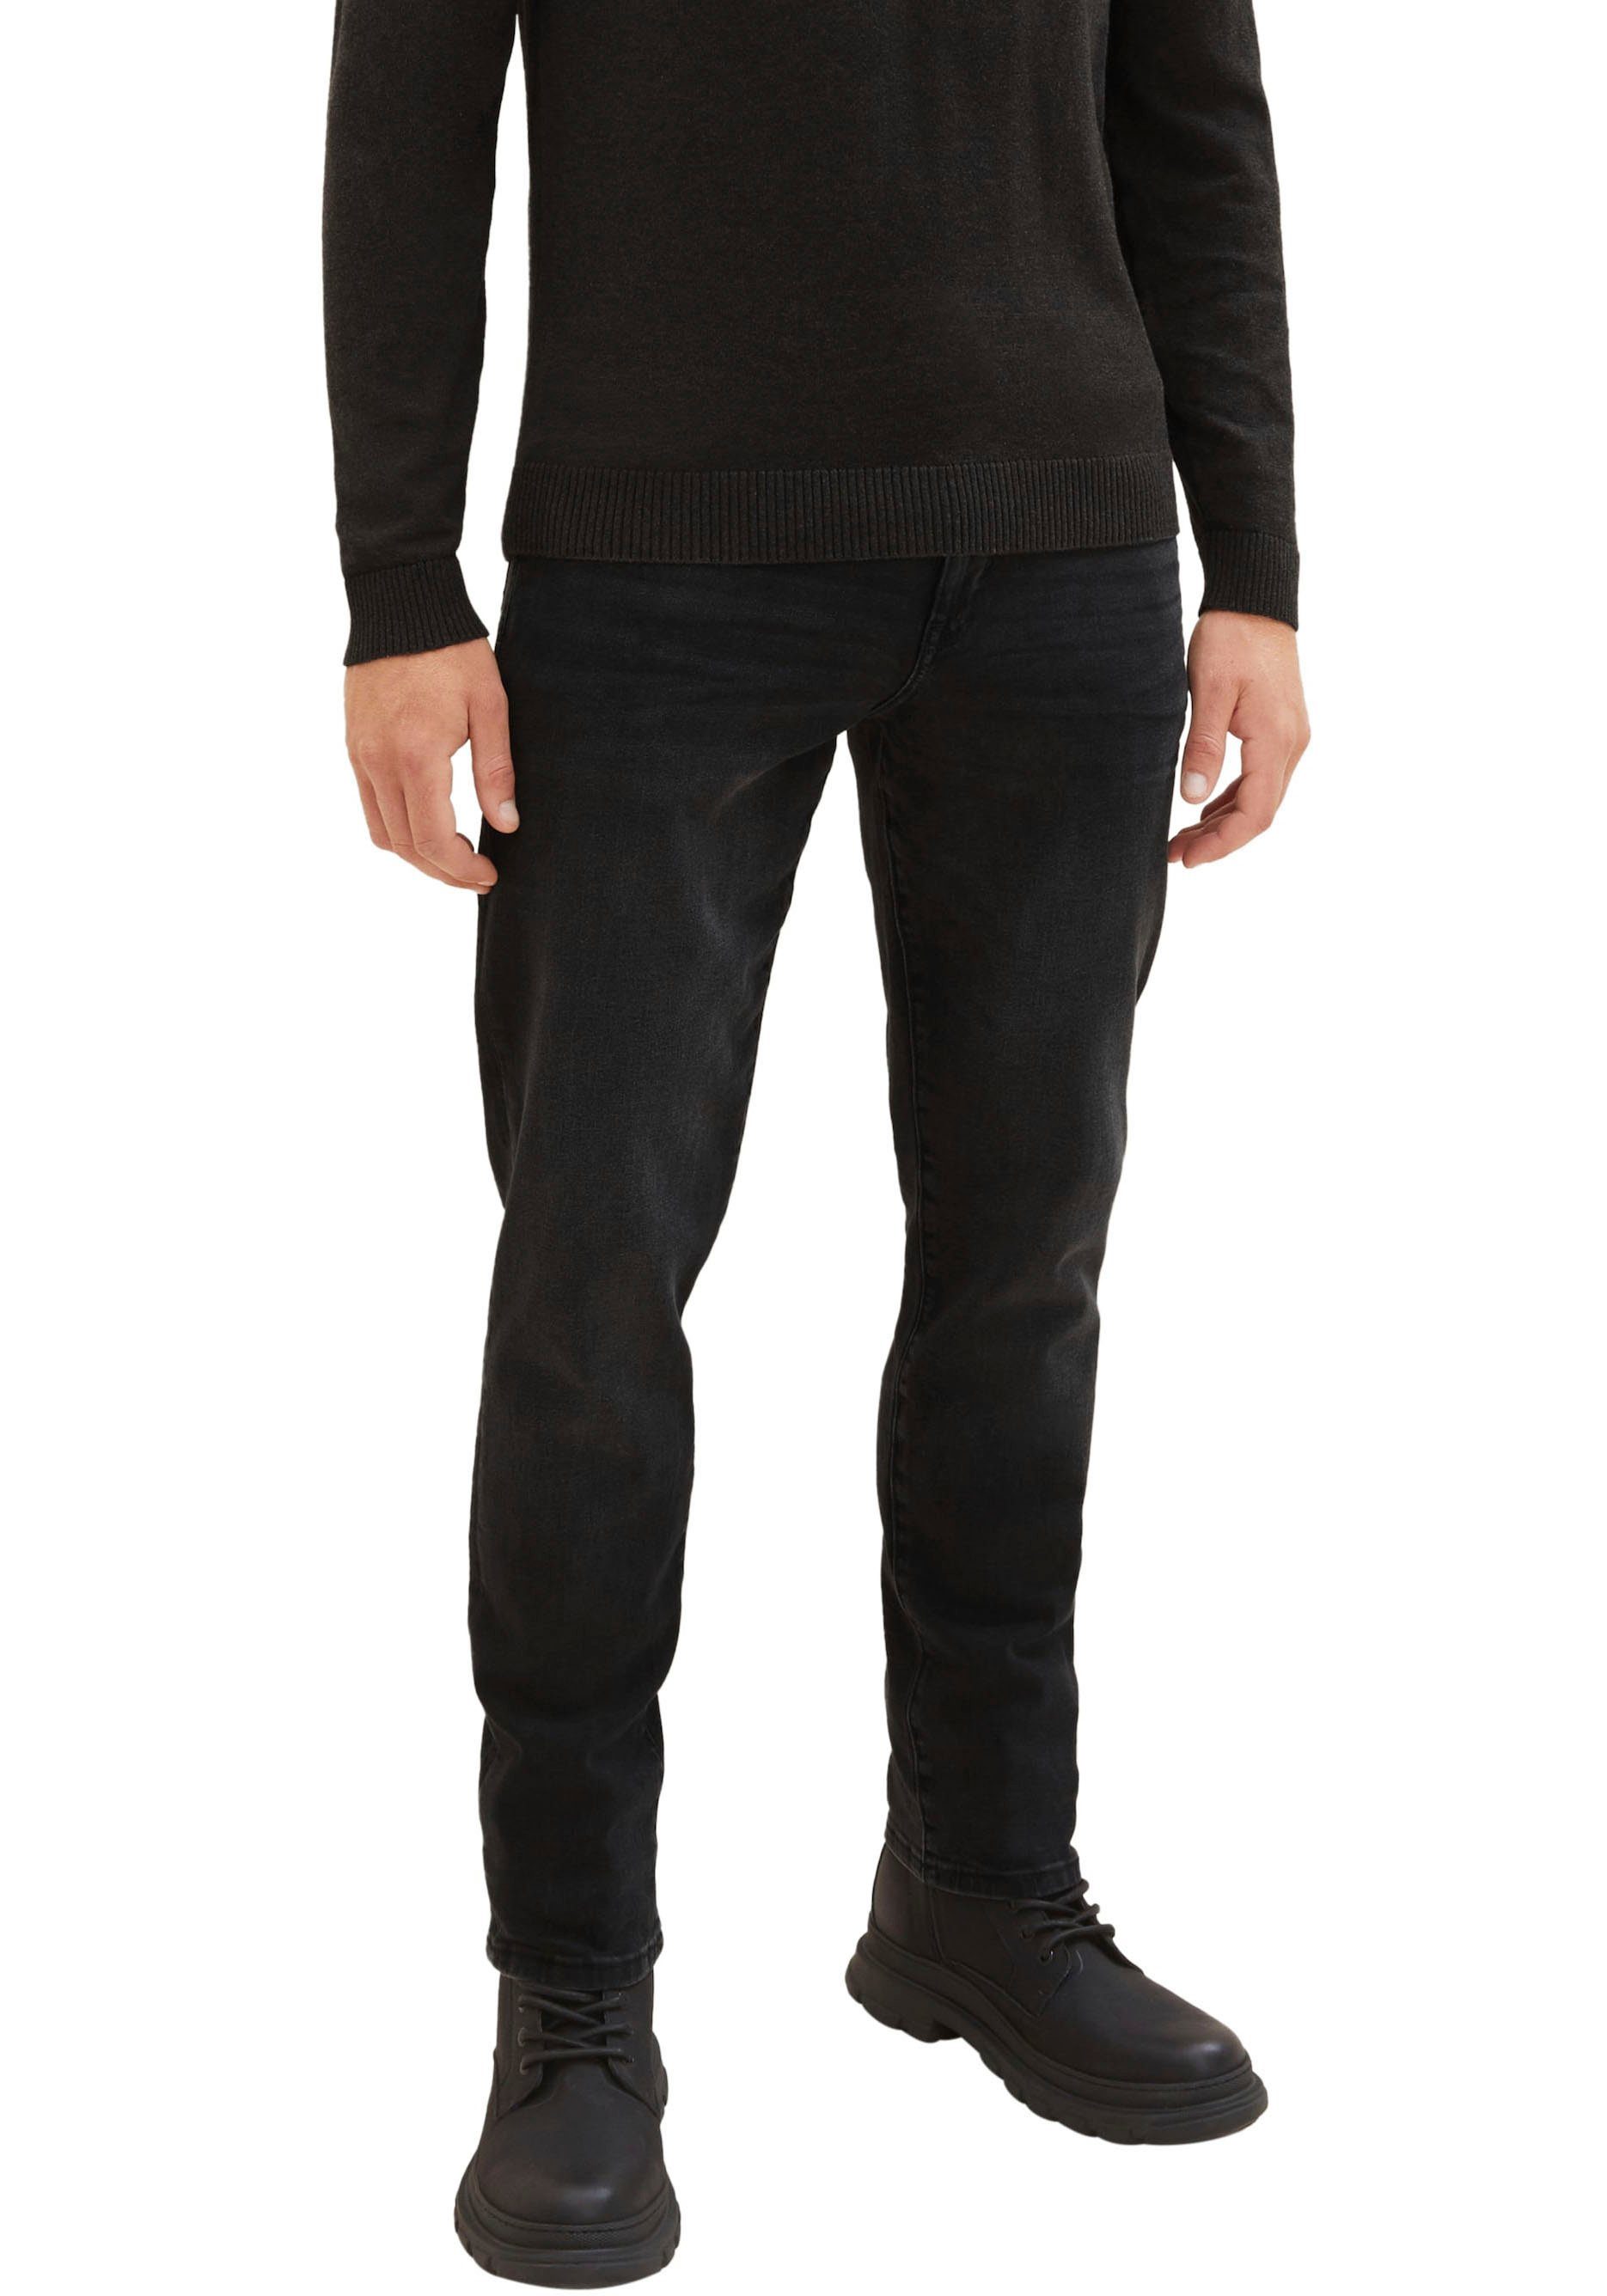 Josh TOM mit TAILOR black Reißverschluss 5-Pocket-Jeans